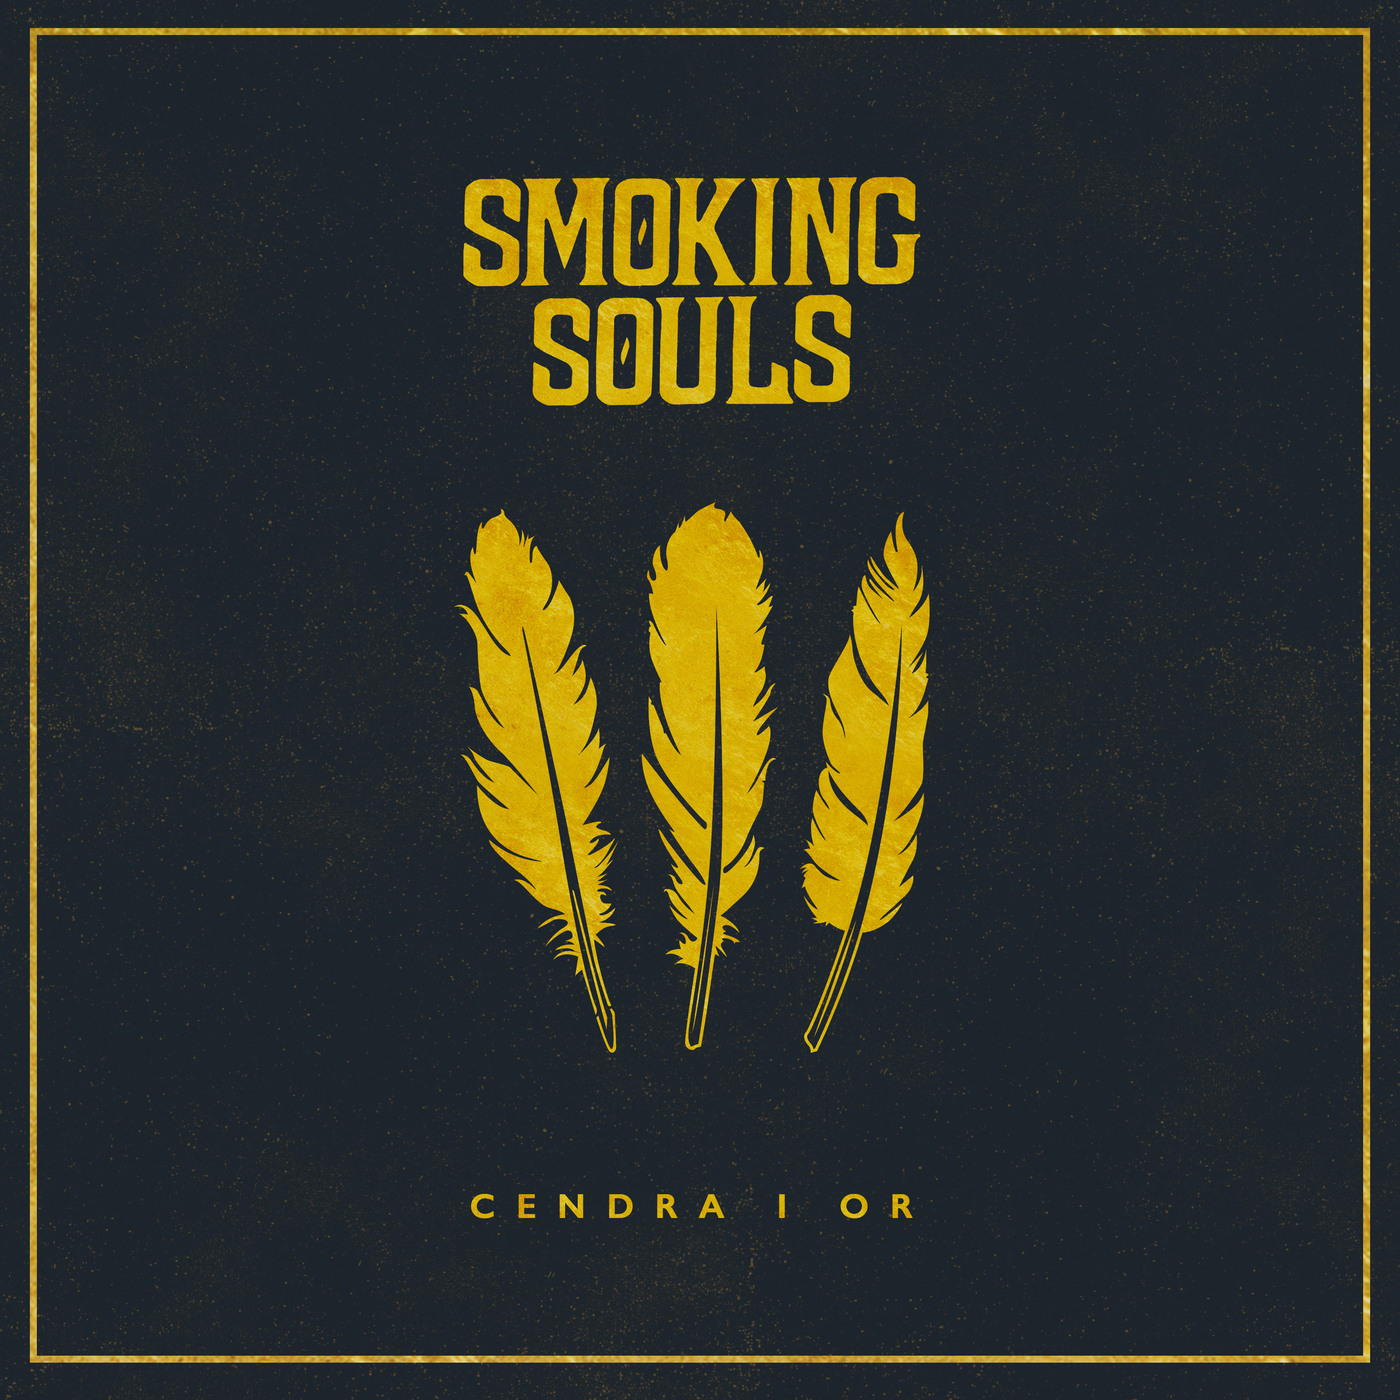 Smoking Souls - Cendra i or | musica en valencià